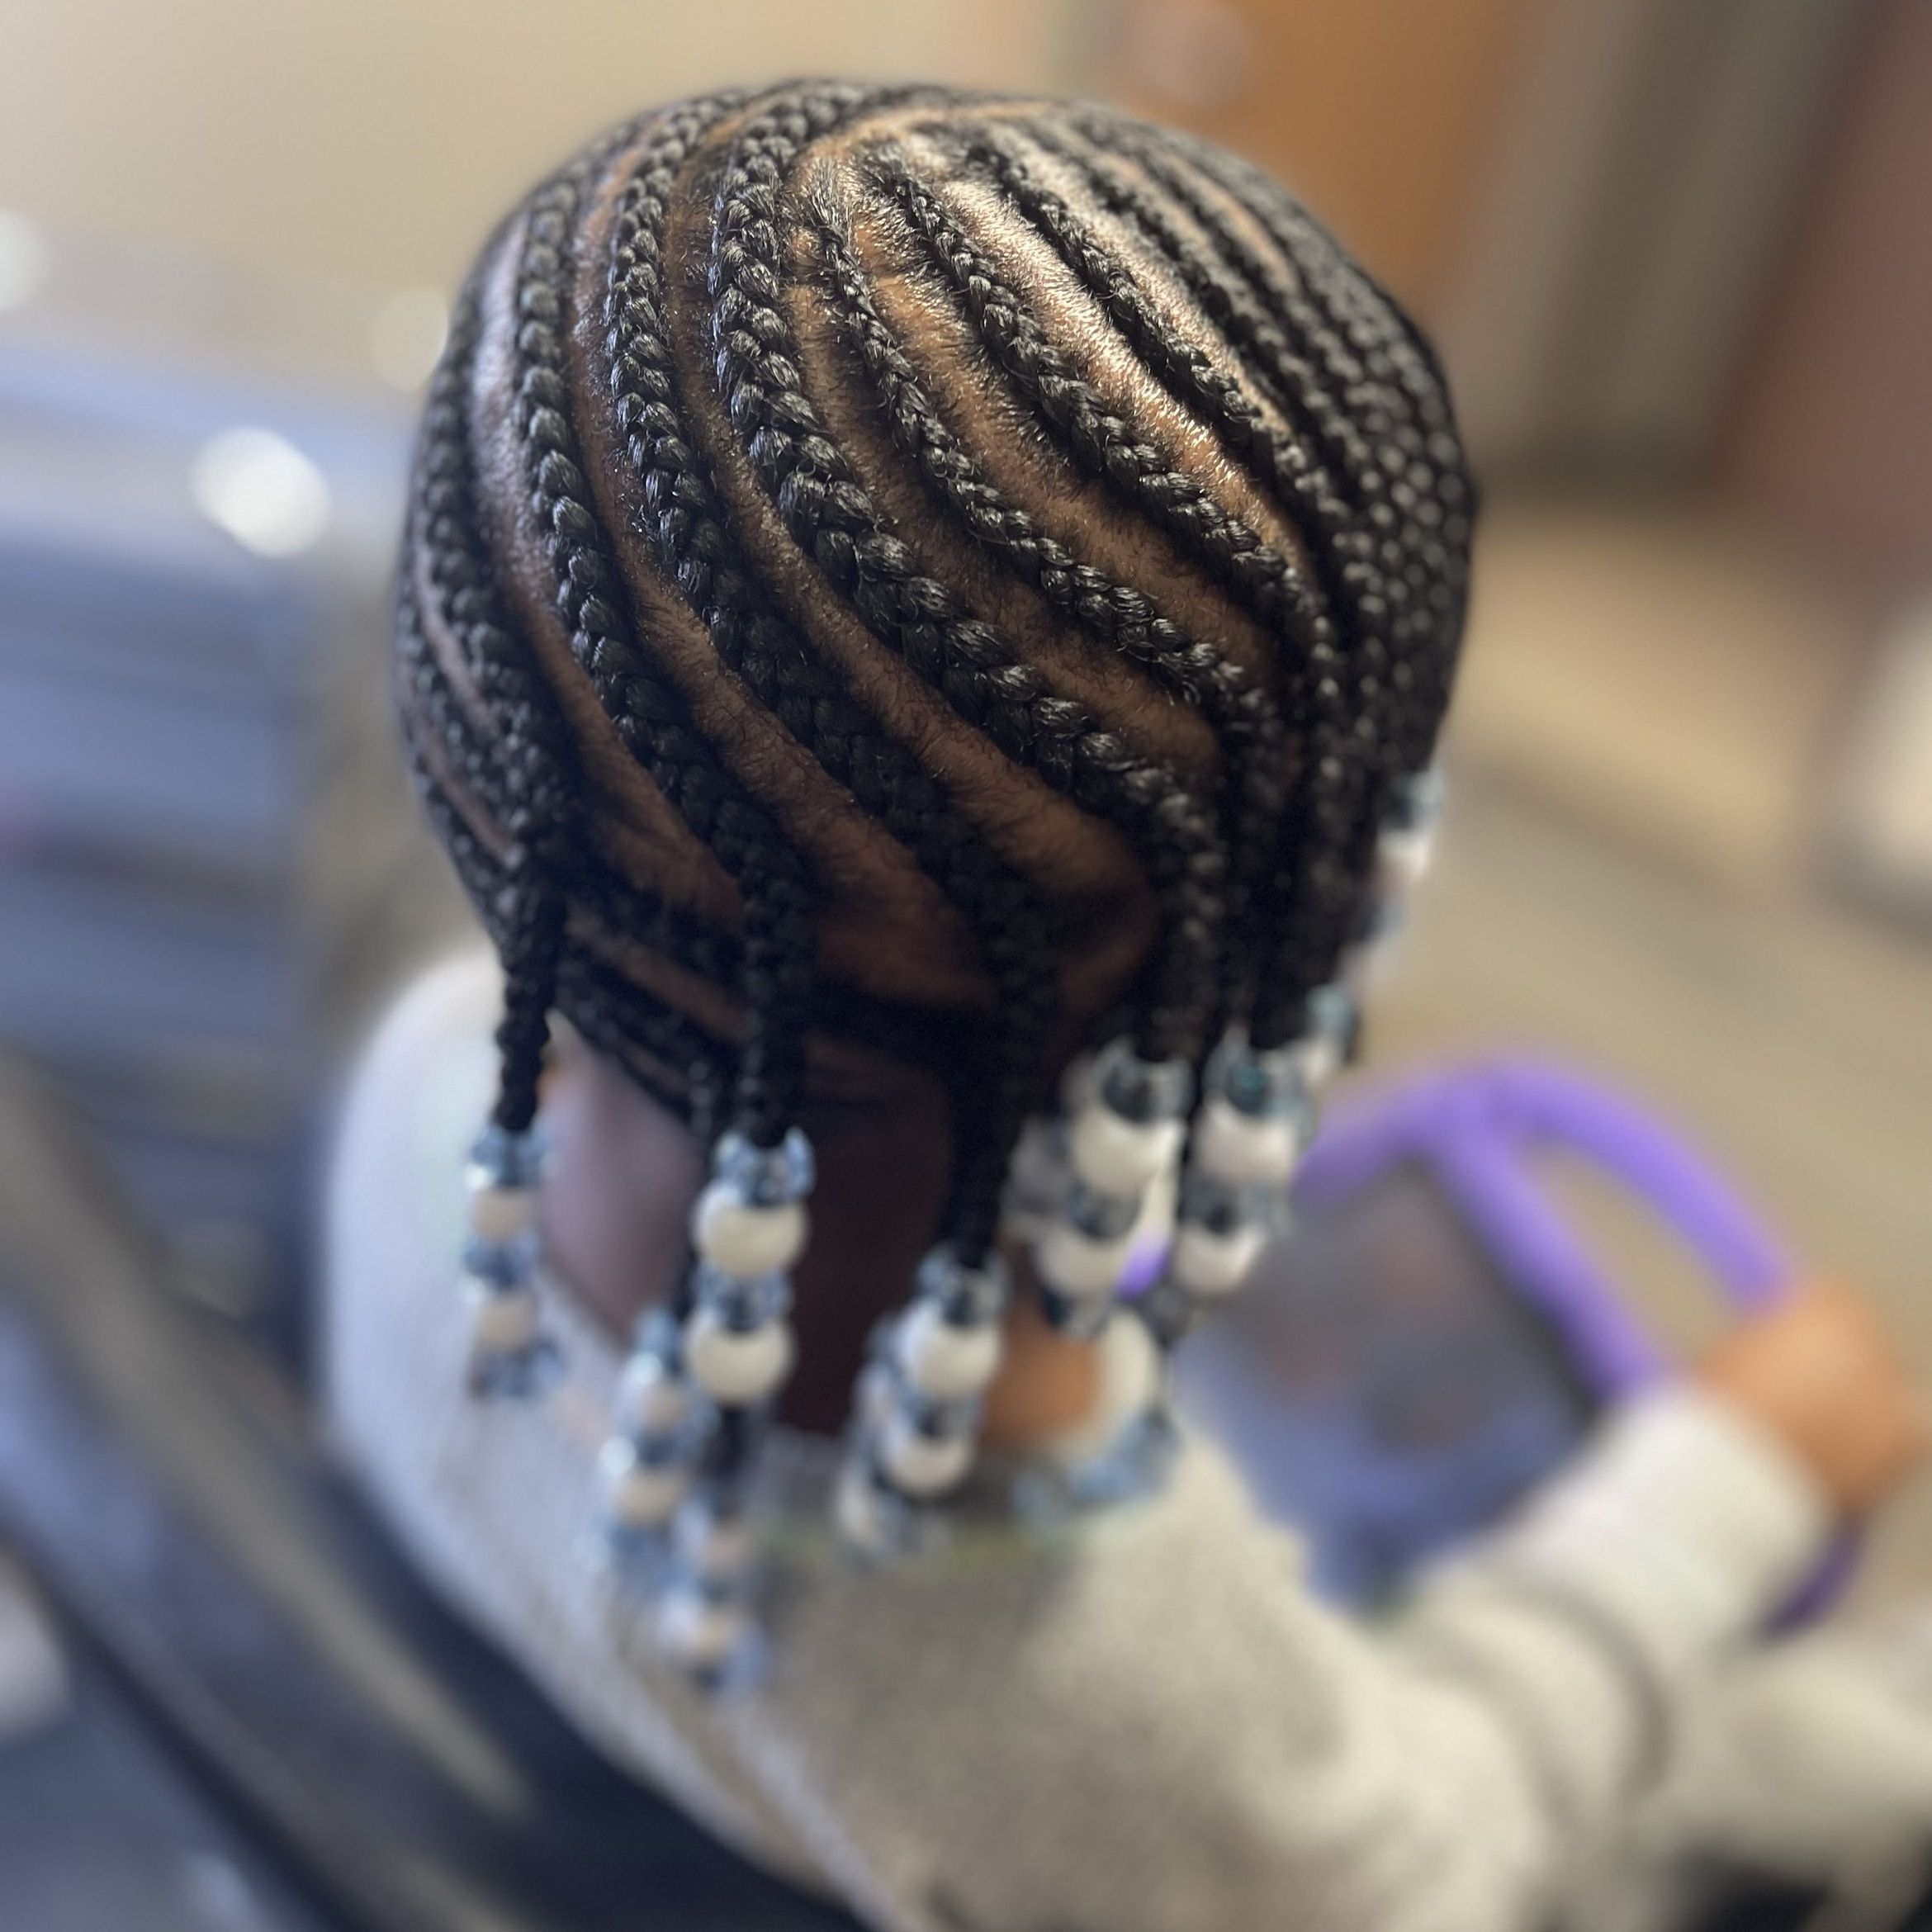 Kids French braids (beads and hair added) portfolio